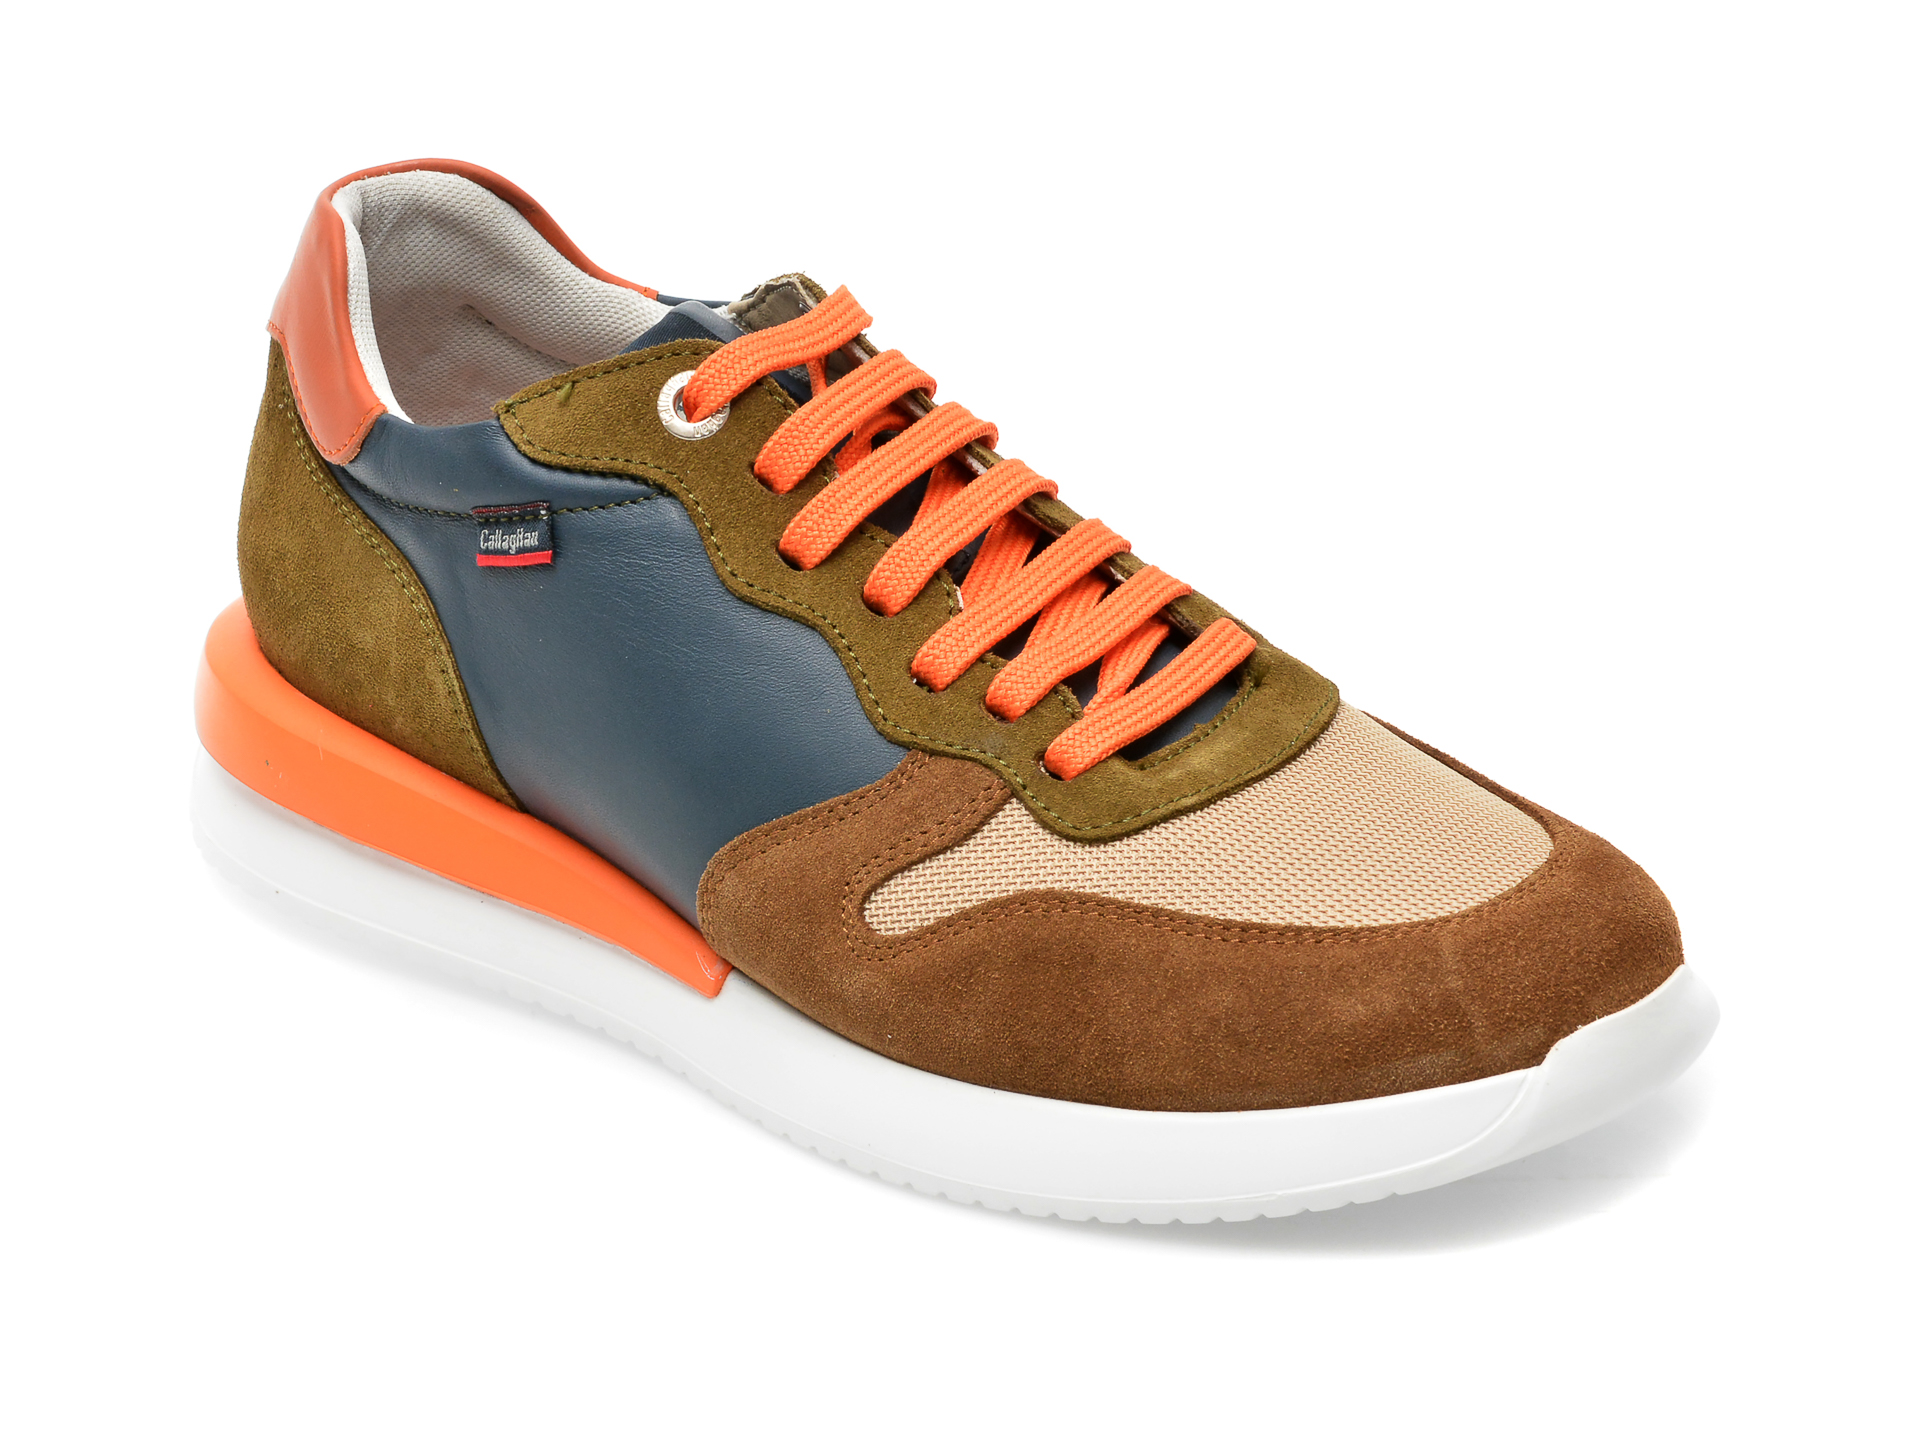 Pantofi CALLAGHAN multicolor, 51103, din piele intoarsa si material textil /barbati/pantofi